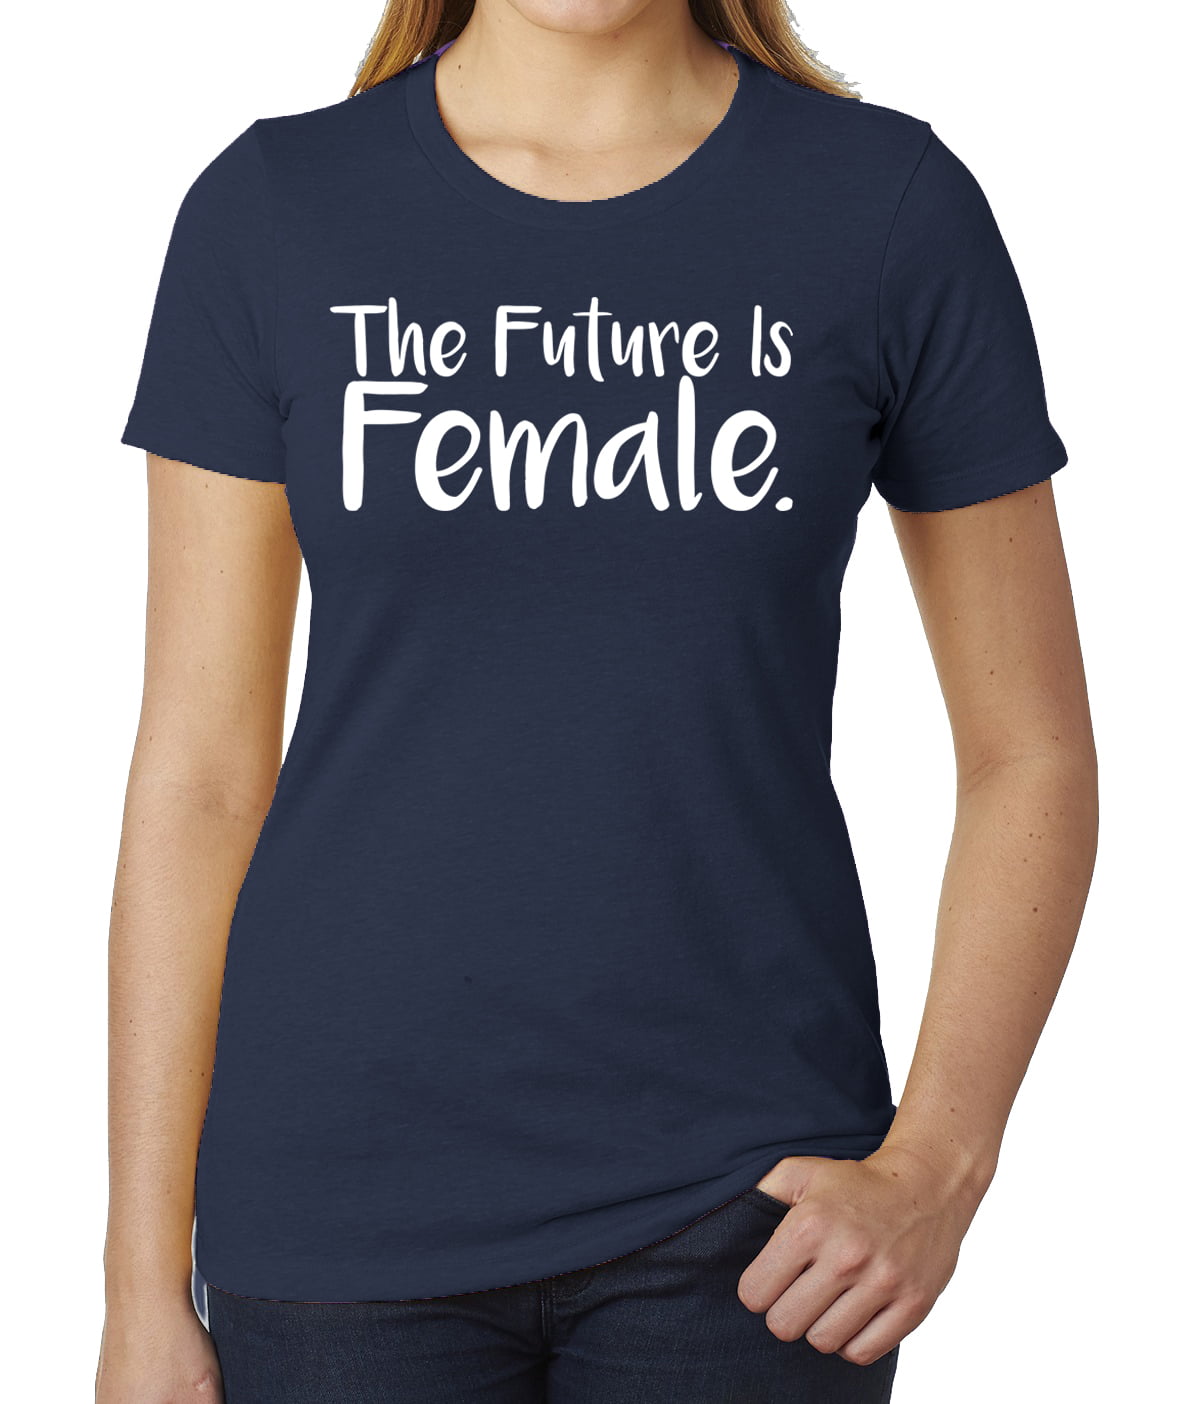 THE FUTURE IS FEMALE Tshirt Unisex Feminist T Shirt Feminism Protest Top 